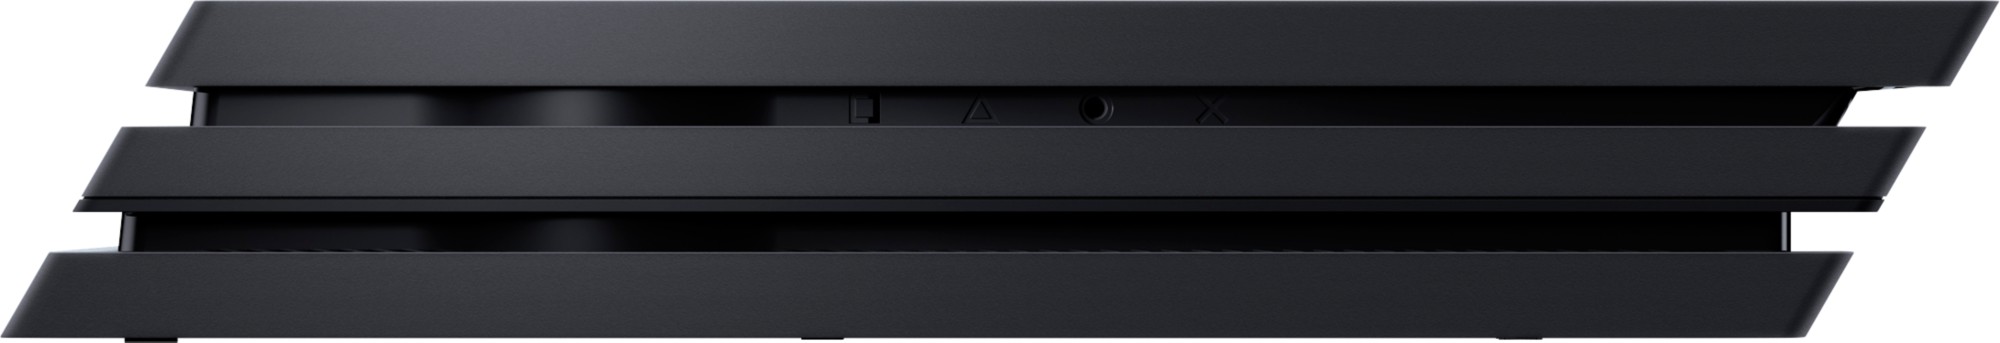 PlayStation 4 Pro (1TB, Jet Black) + God of War